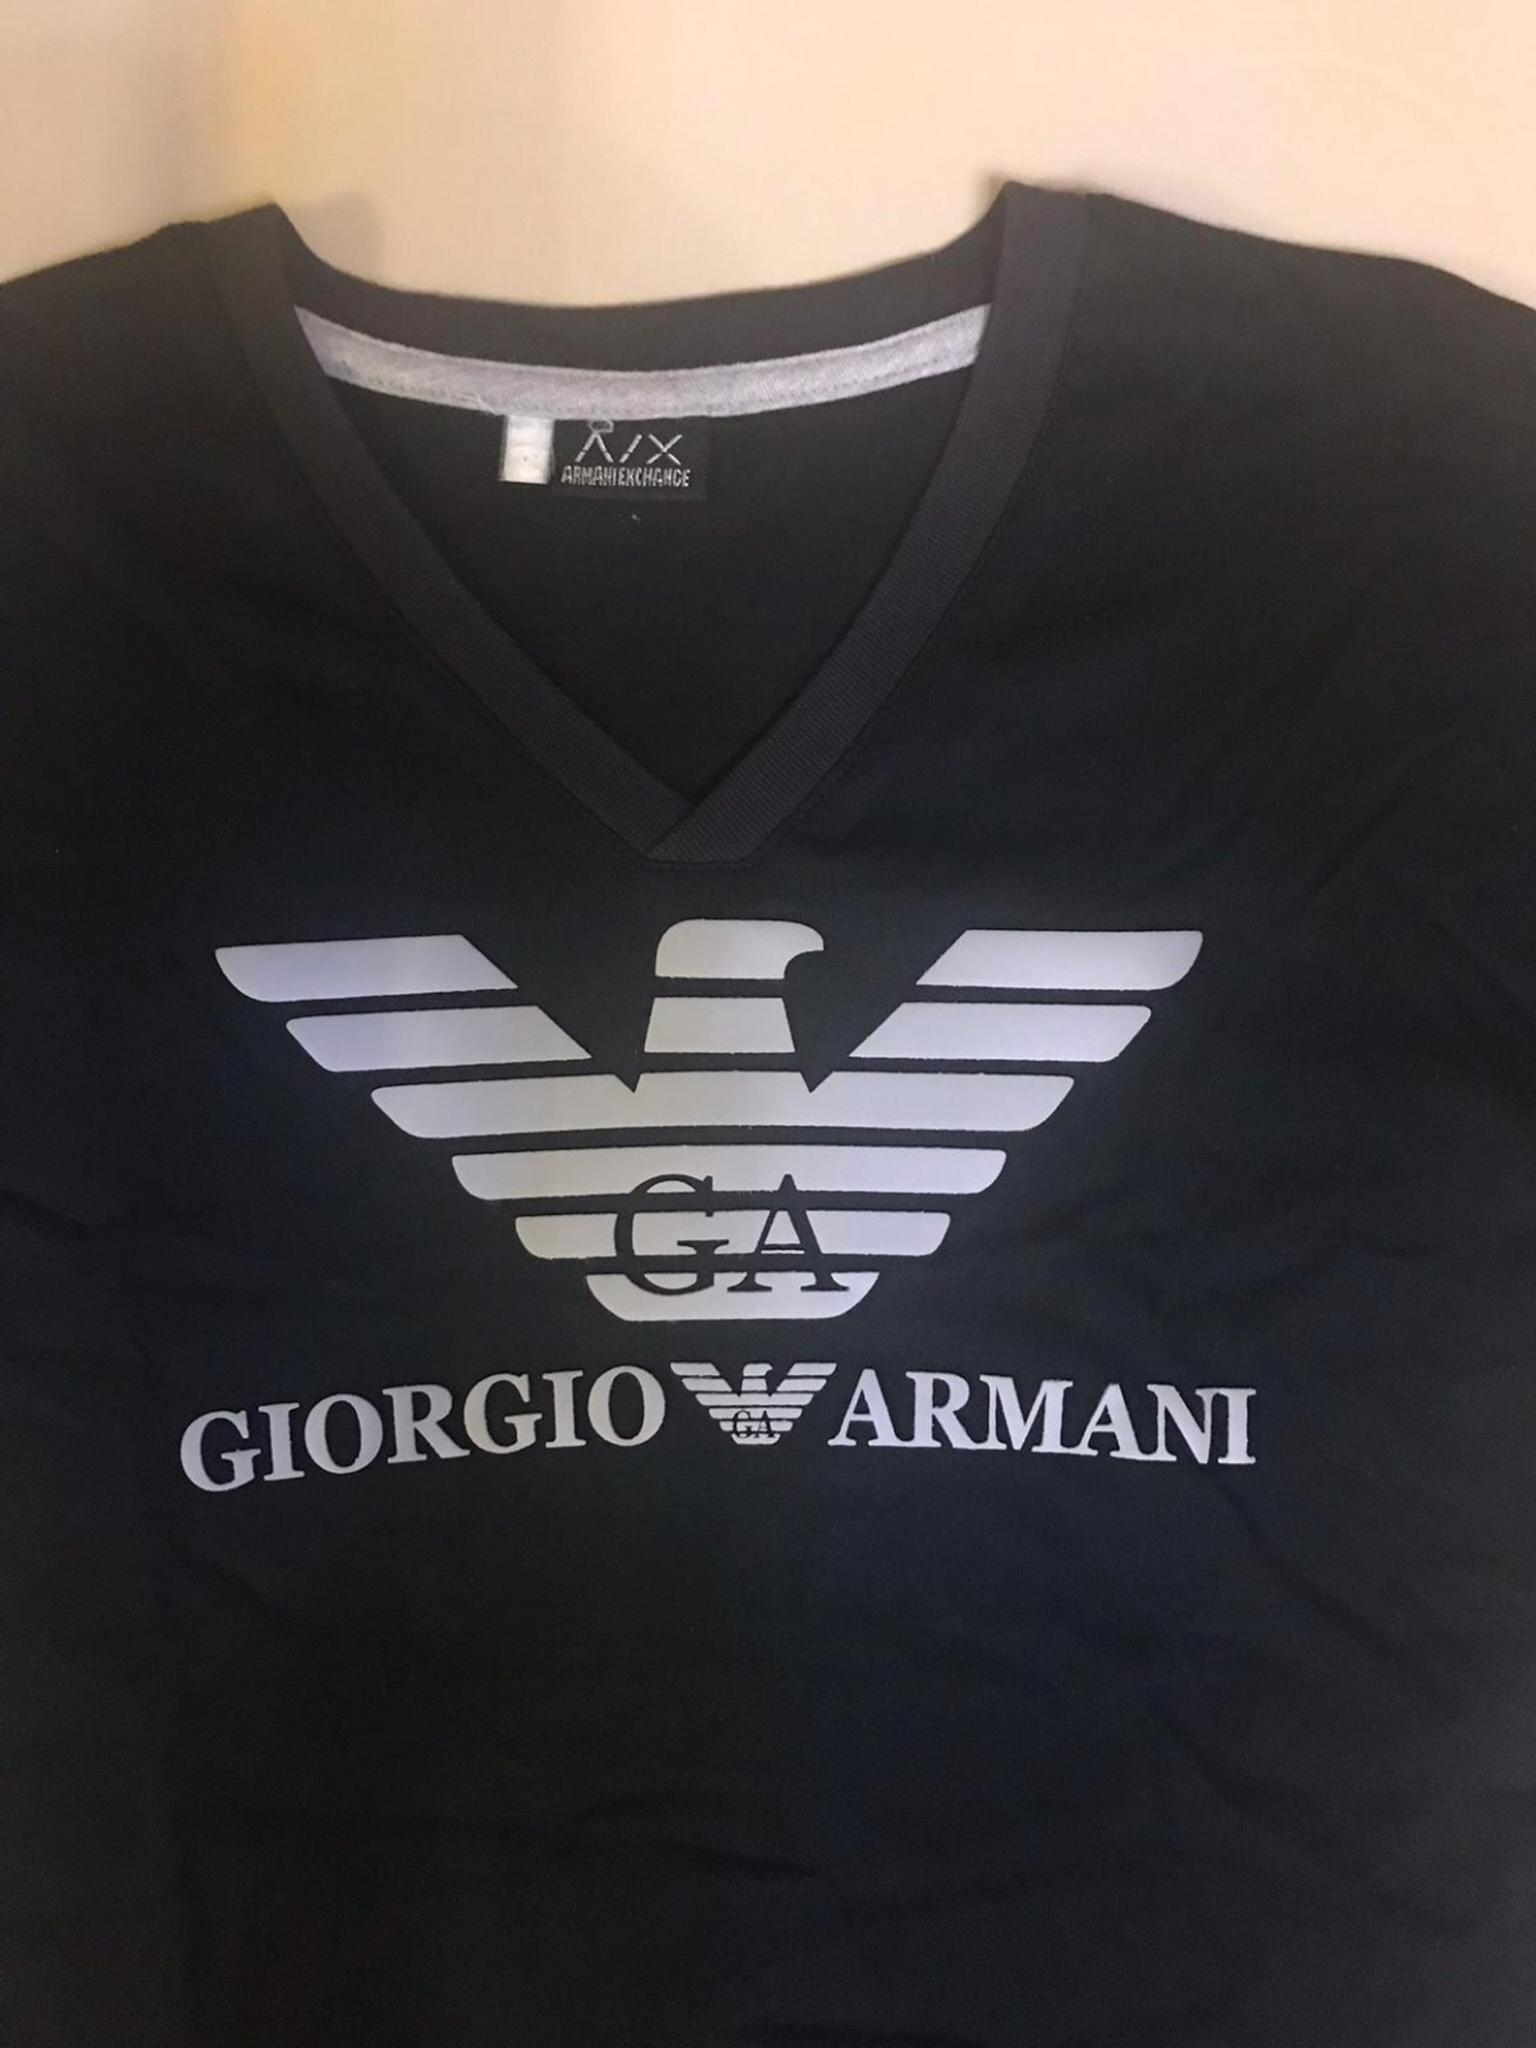 giorgio armani black t shirt